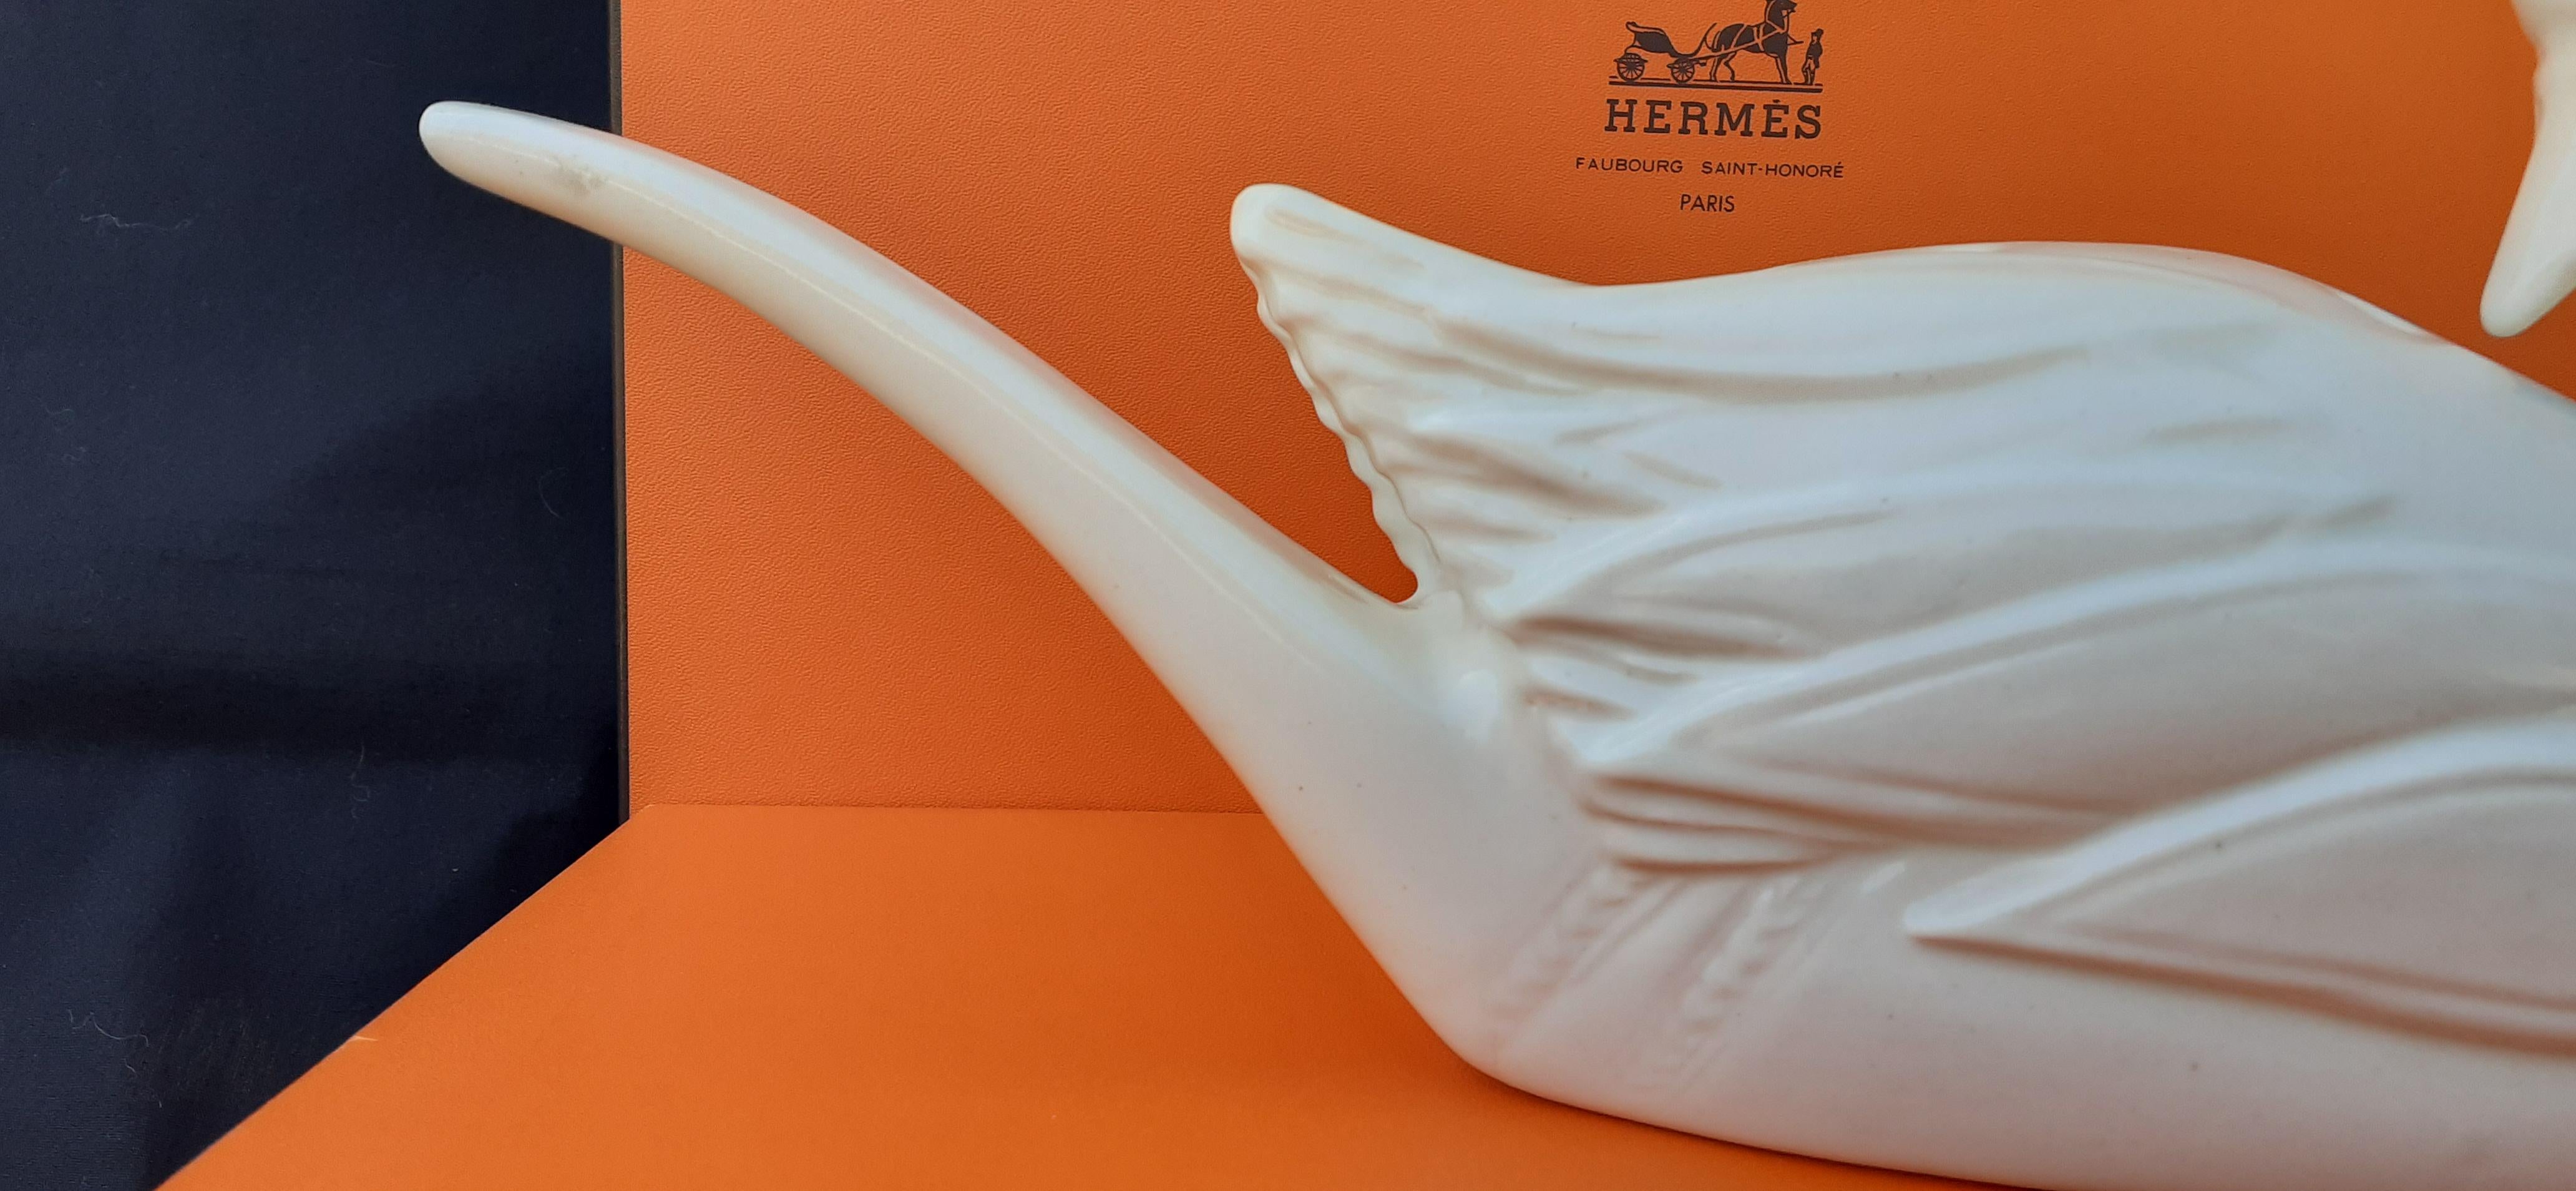 Exceptional Hermès Centerpiece Vase Ceramic Duck From La Mare aux Canards RARE For Sale 4